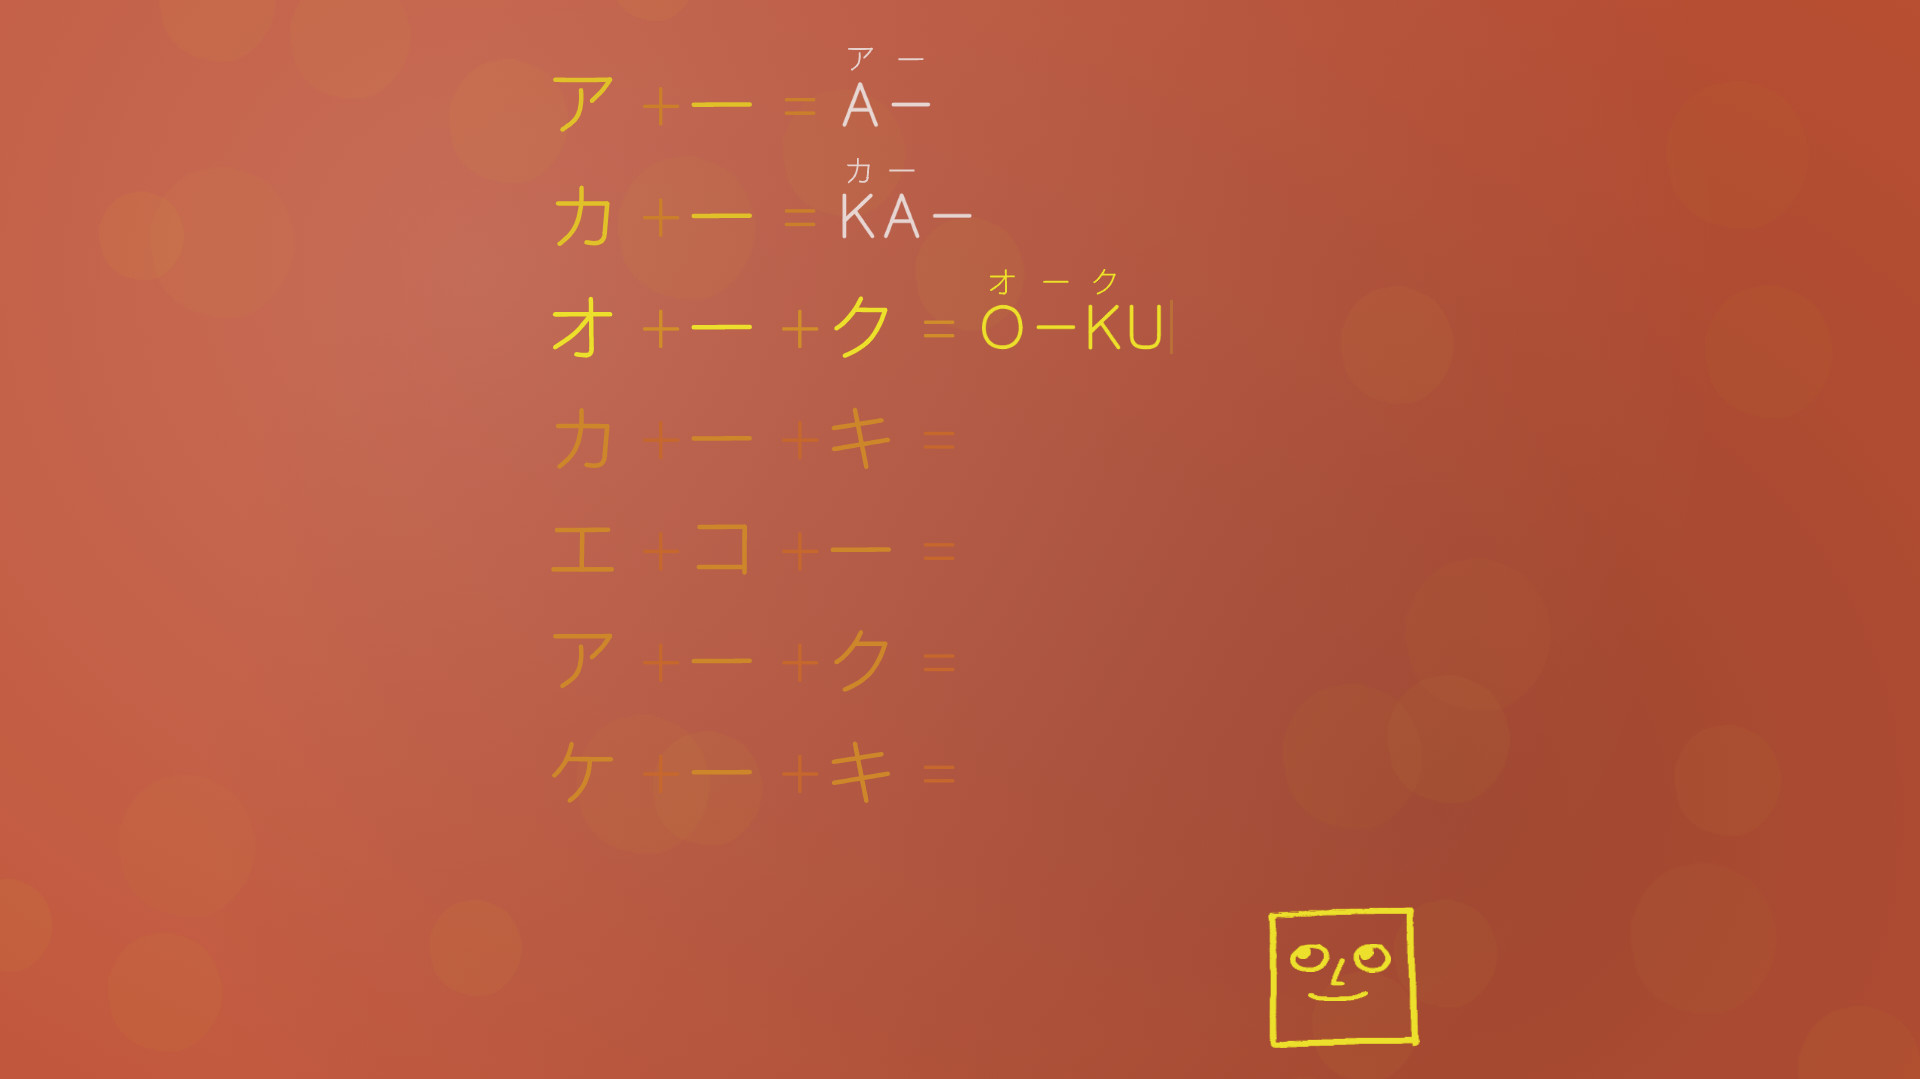 иллюстрации для стима katakana фото 100